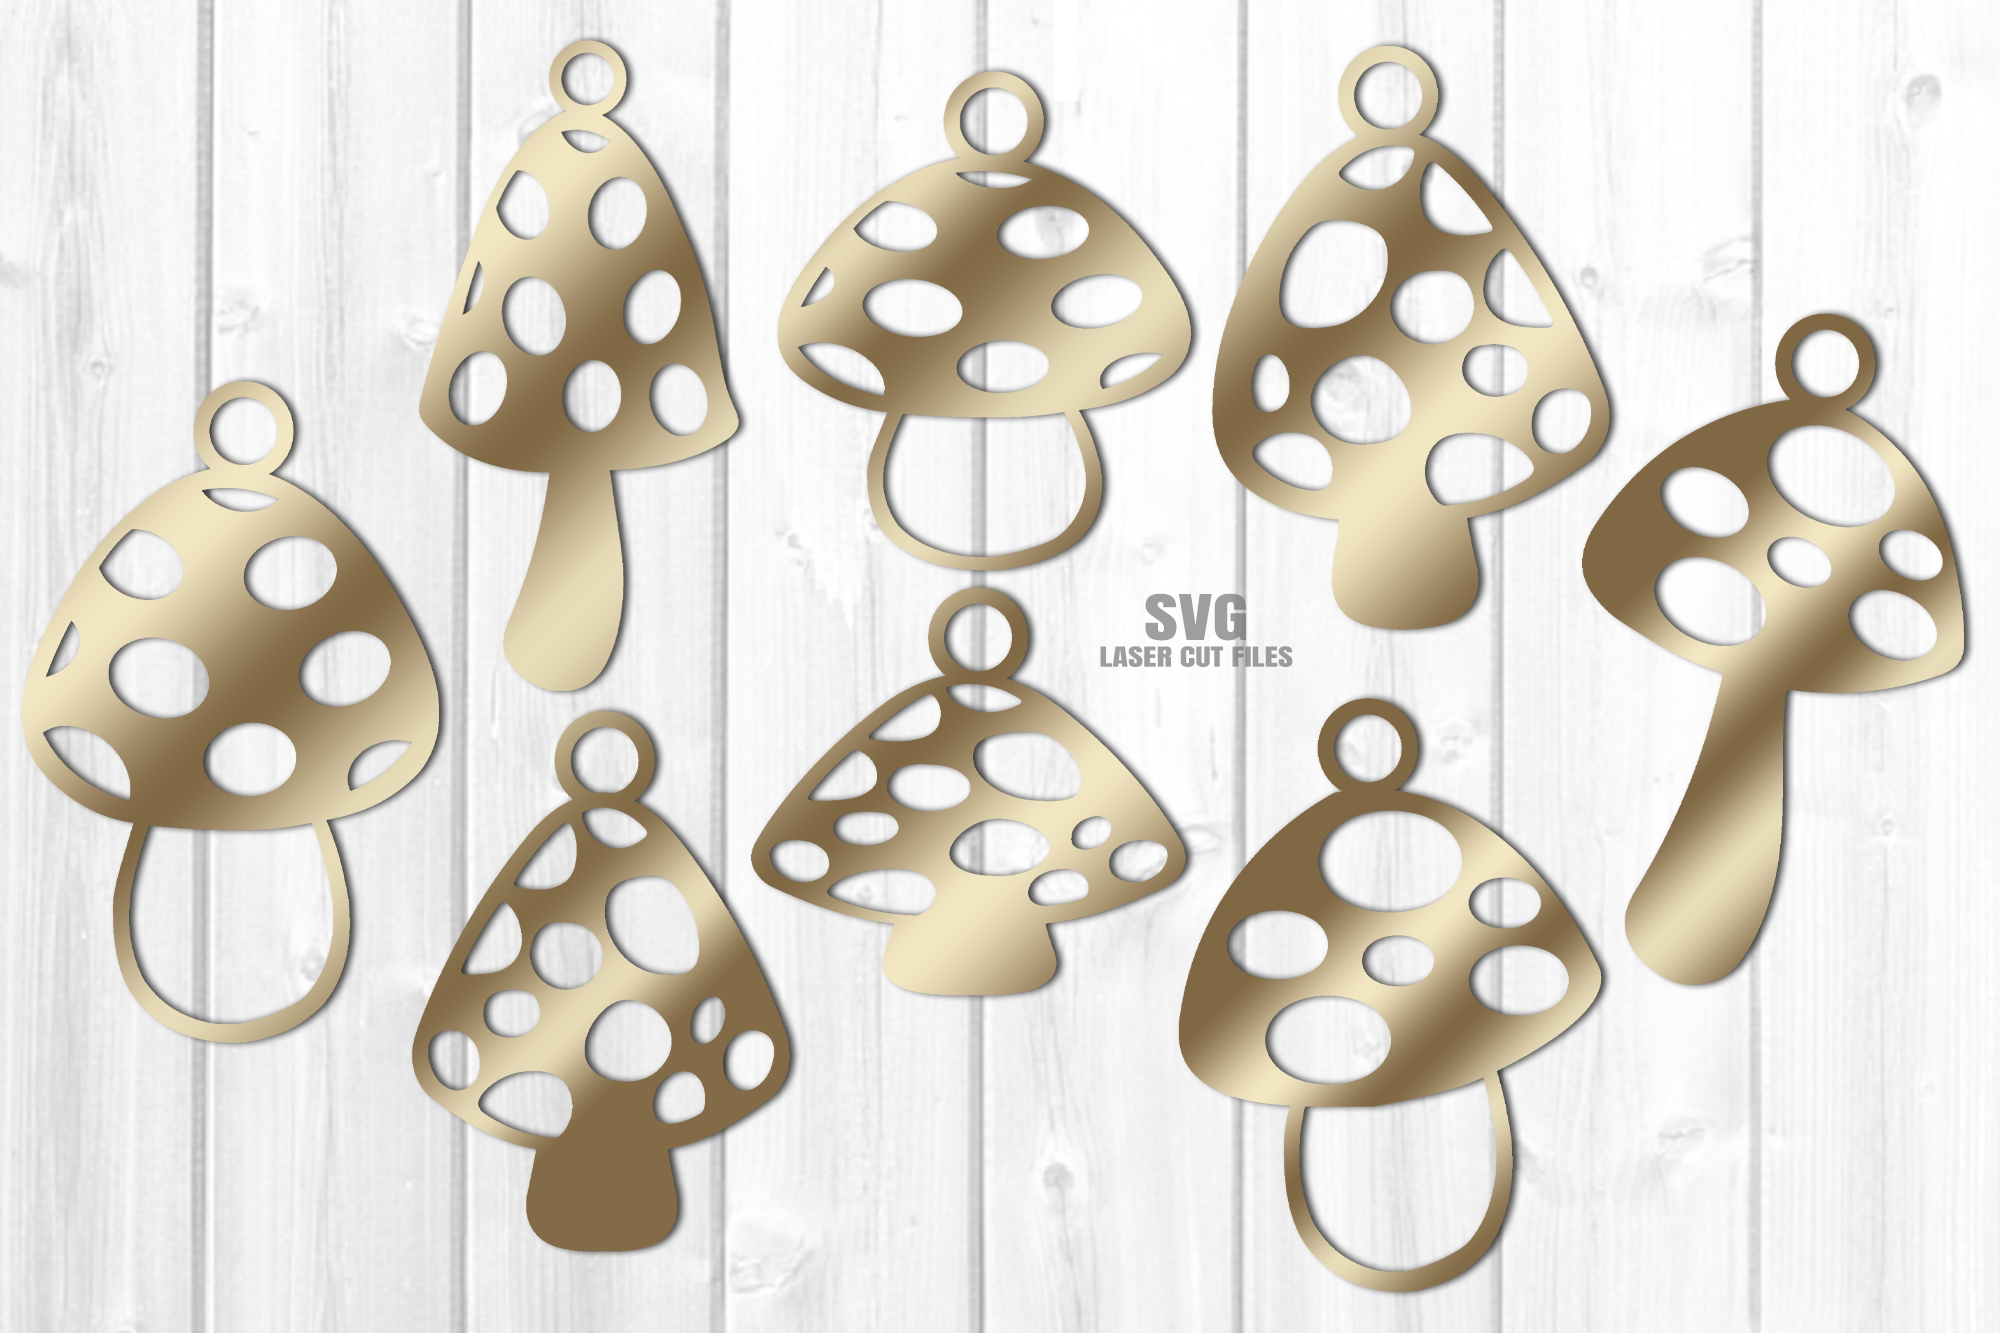 Diverse of silver mushrooms earrings.